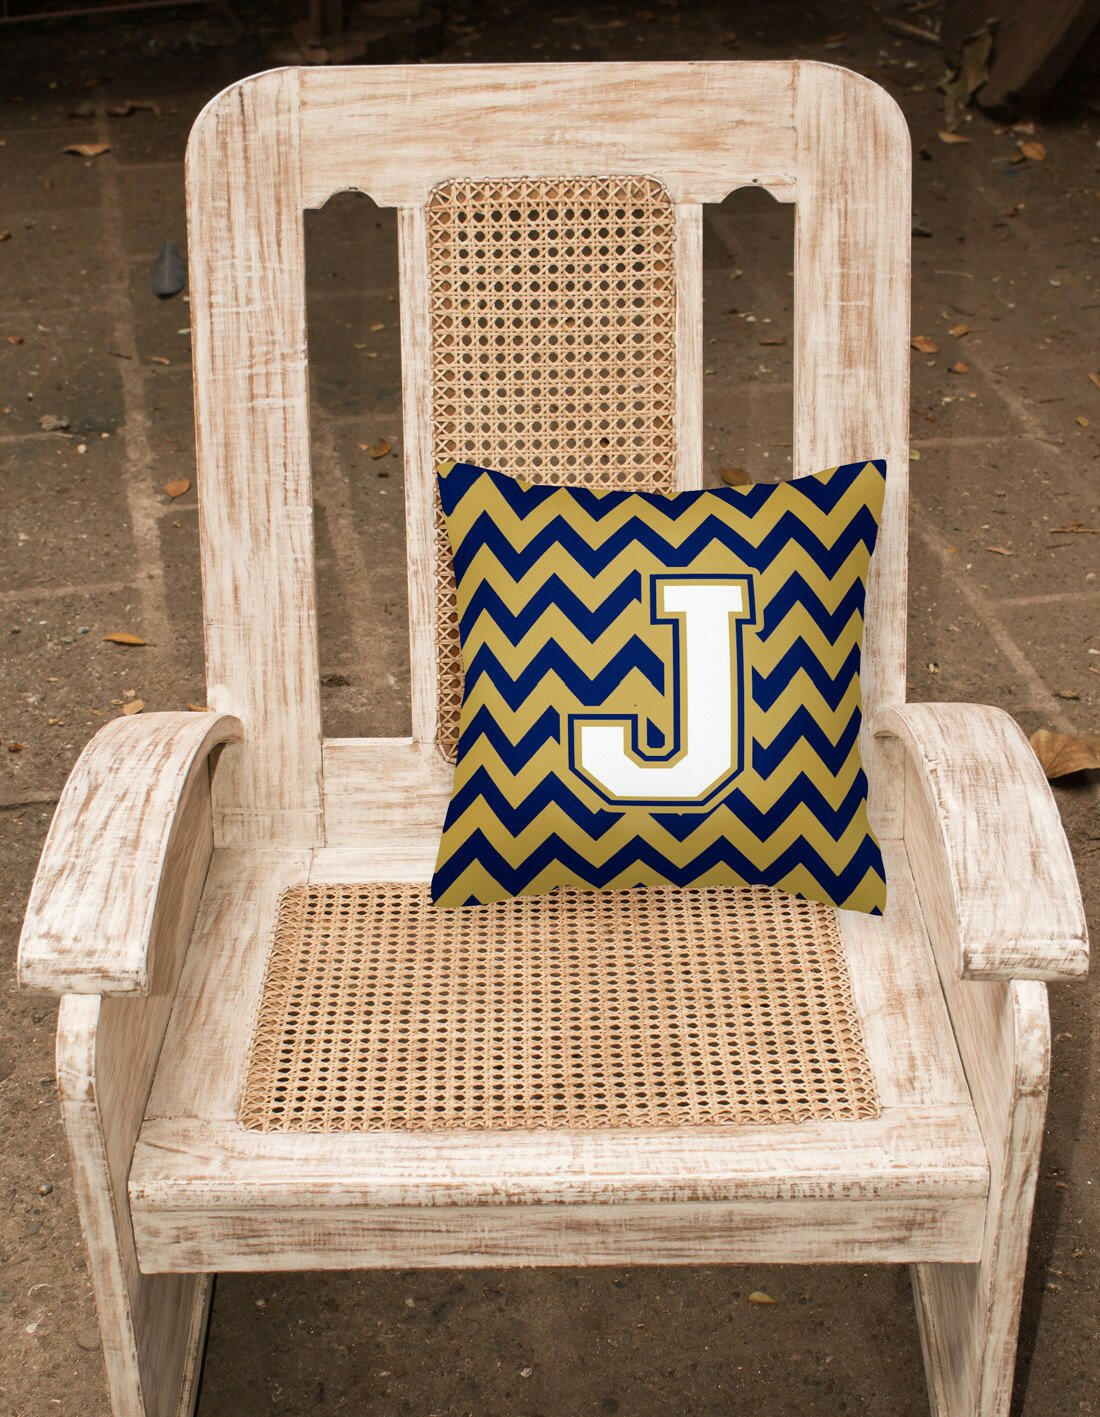 Letter J Chevron Navy Blue and Gold Fabric Decorative Pillow CJ1057-JPW1414 by Caroline's Treasures